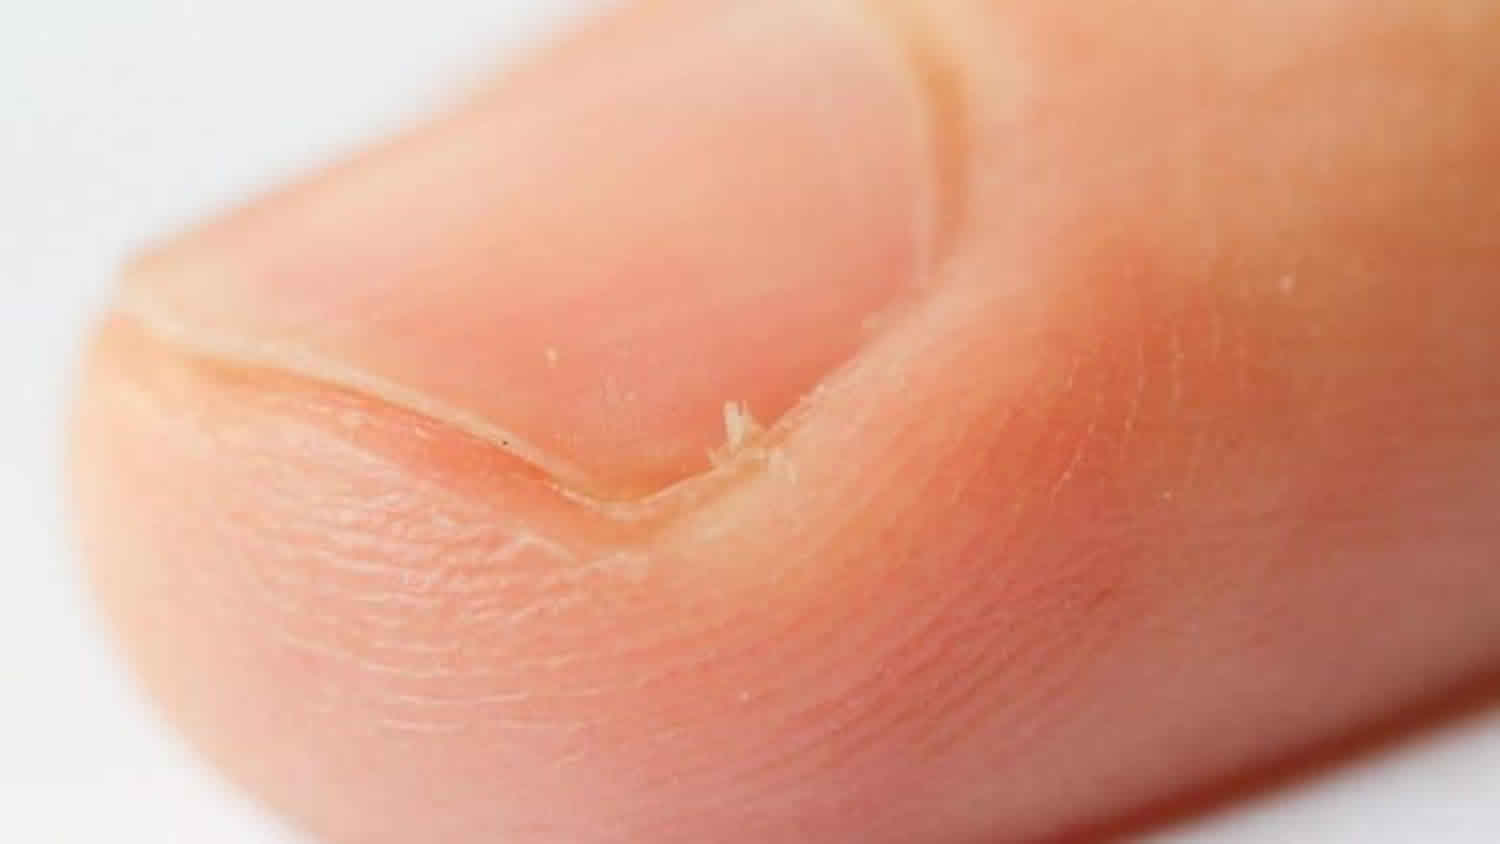 Hangnail & infected hangnail causes, symptoms, diagnosis & treatment